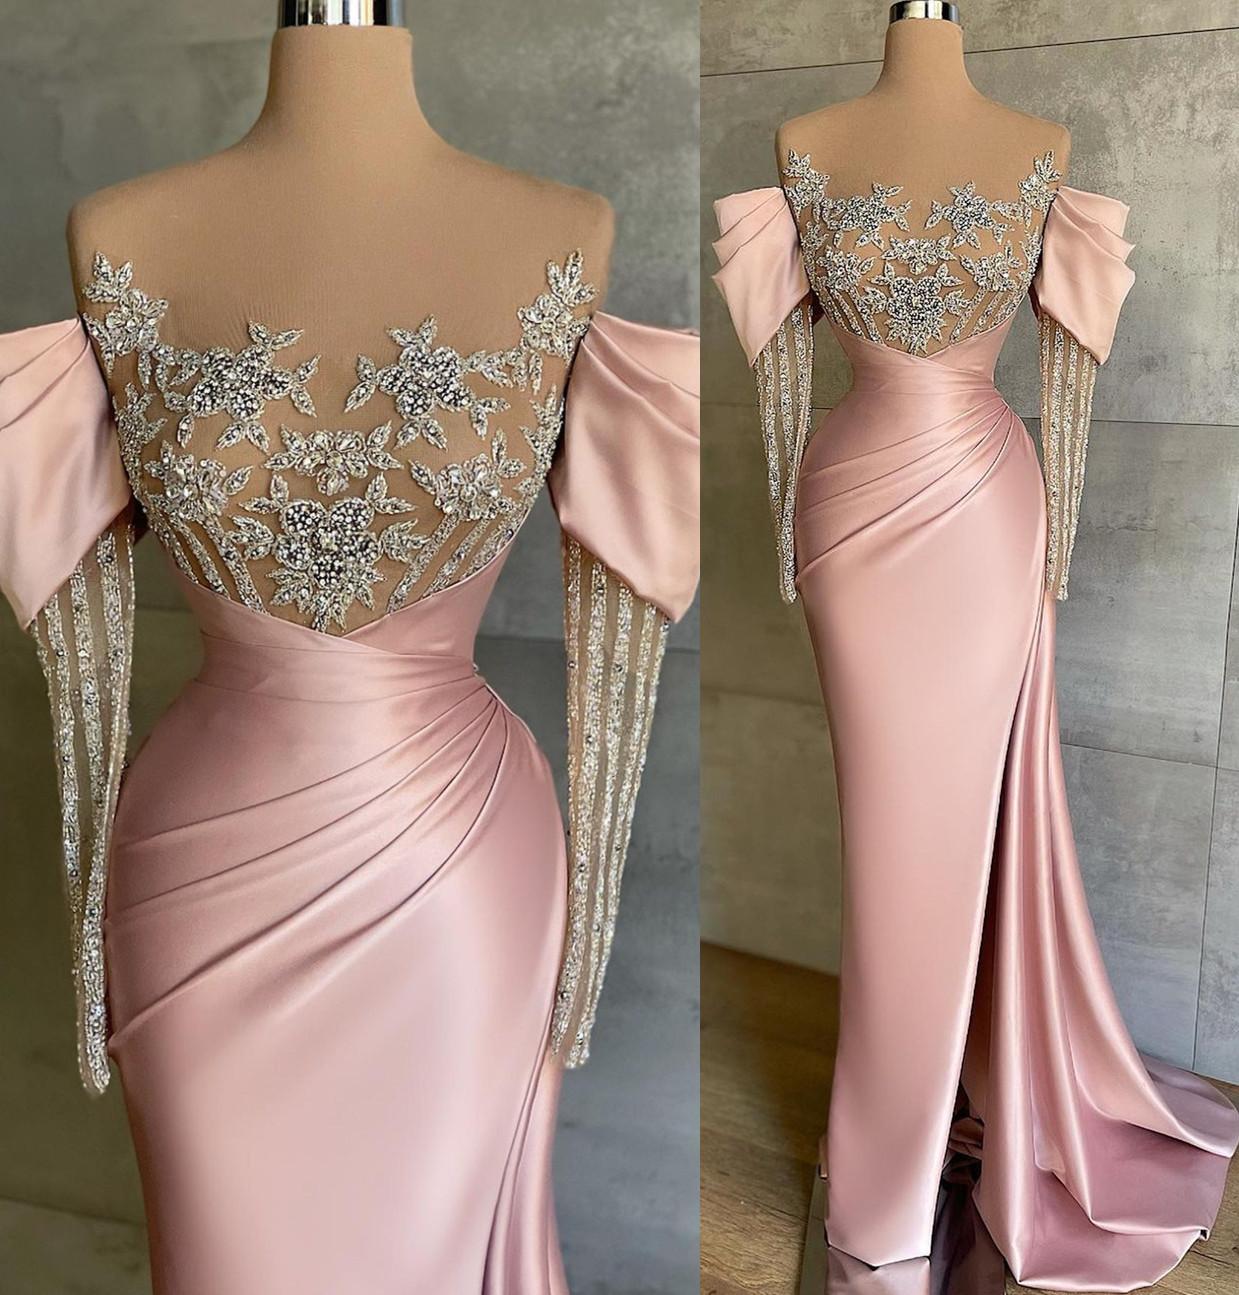 FancyENF Feeling Elegant Crystal Beaded Evening Dress